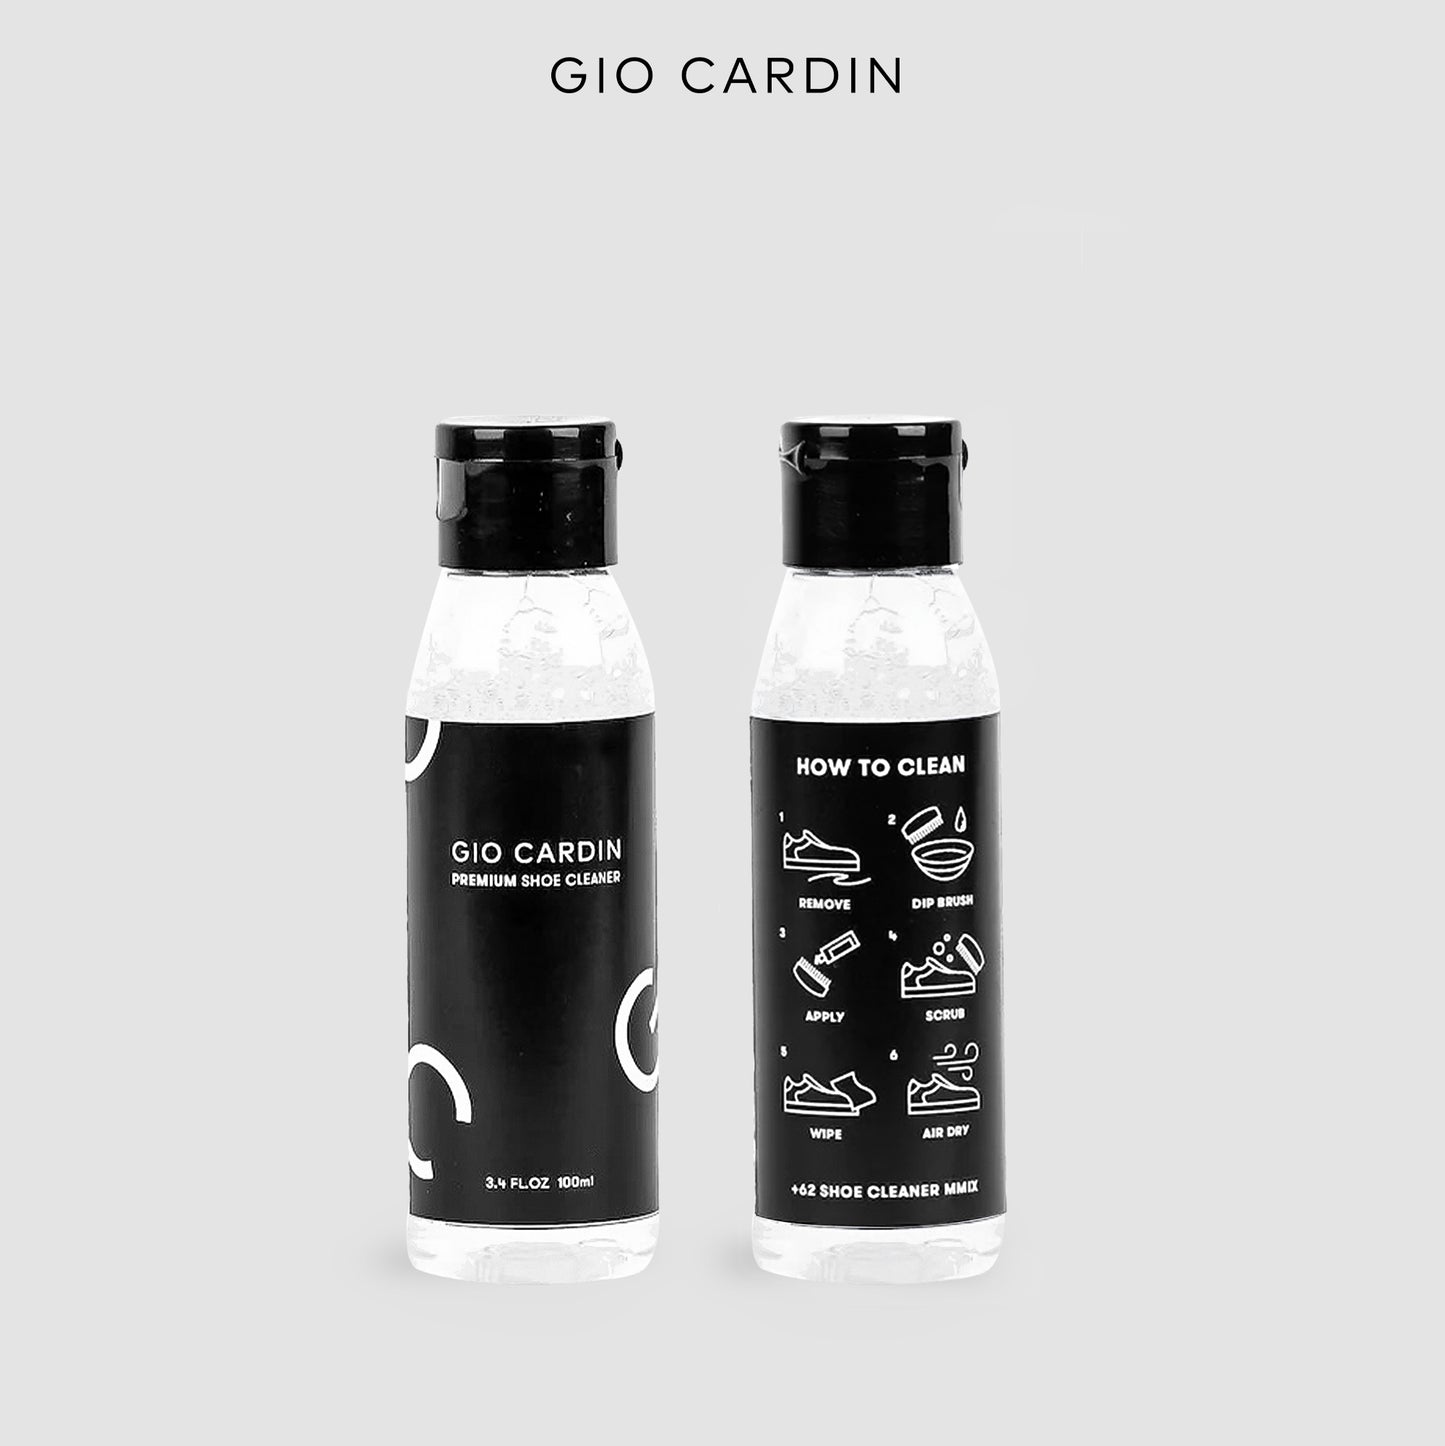 GIO CARDIN PREMIUM SHOE CLEANER - Gio Cardin